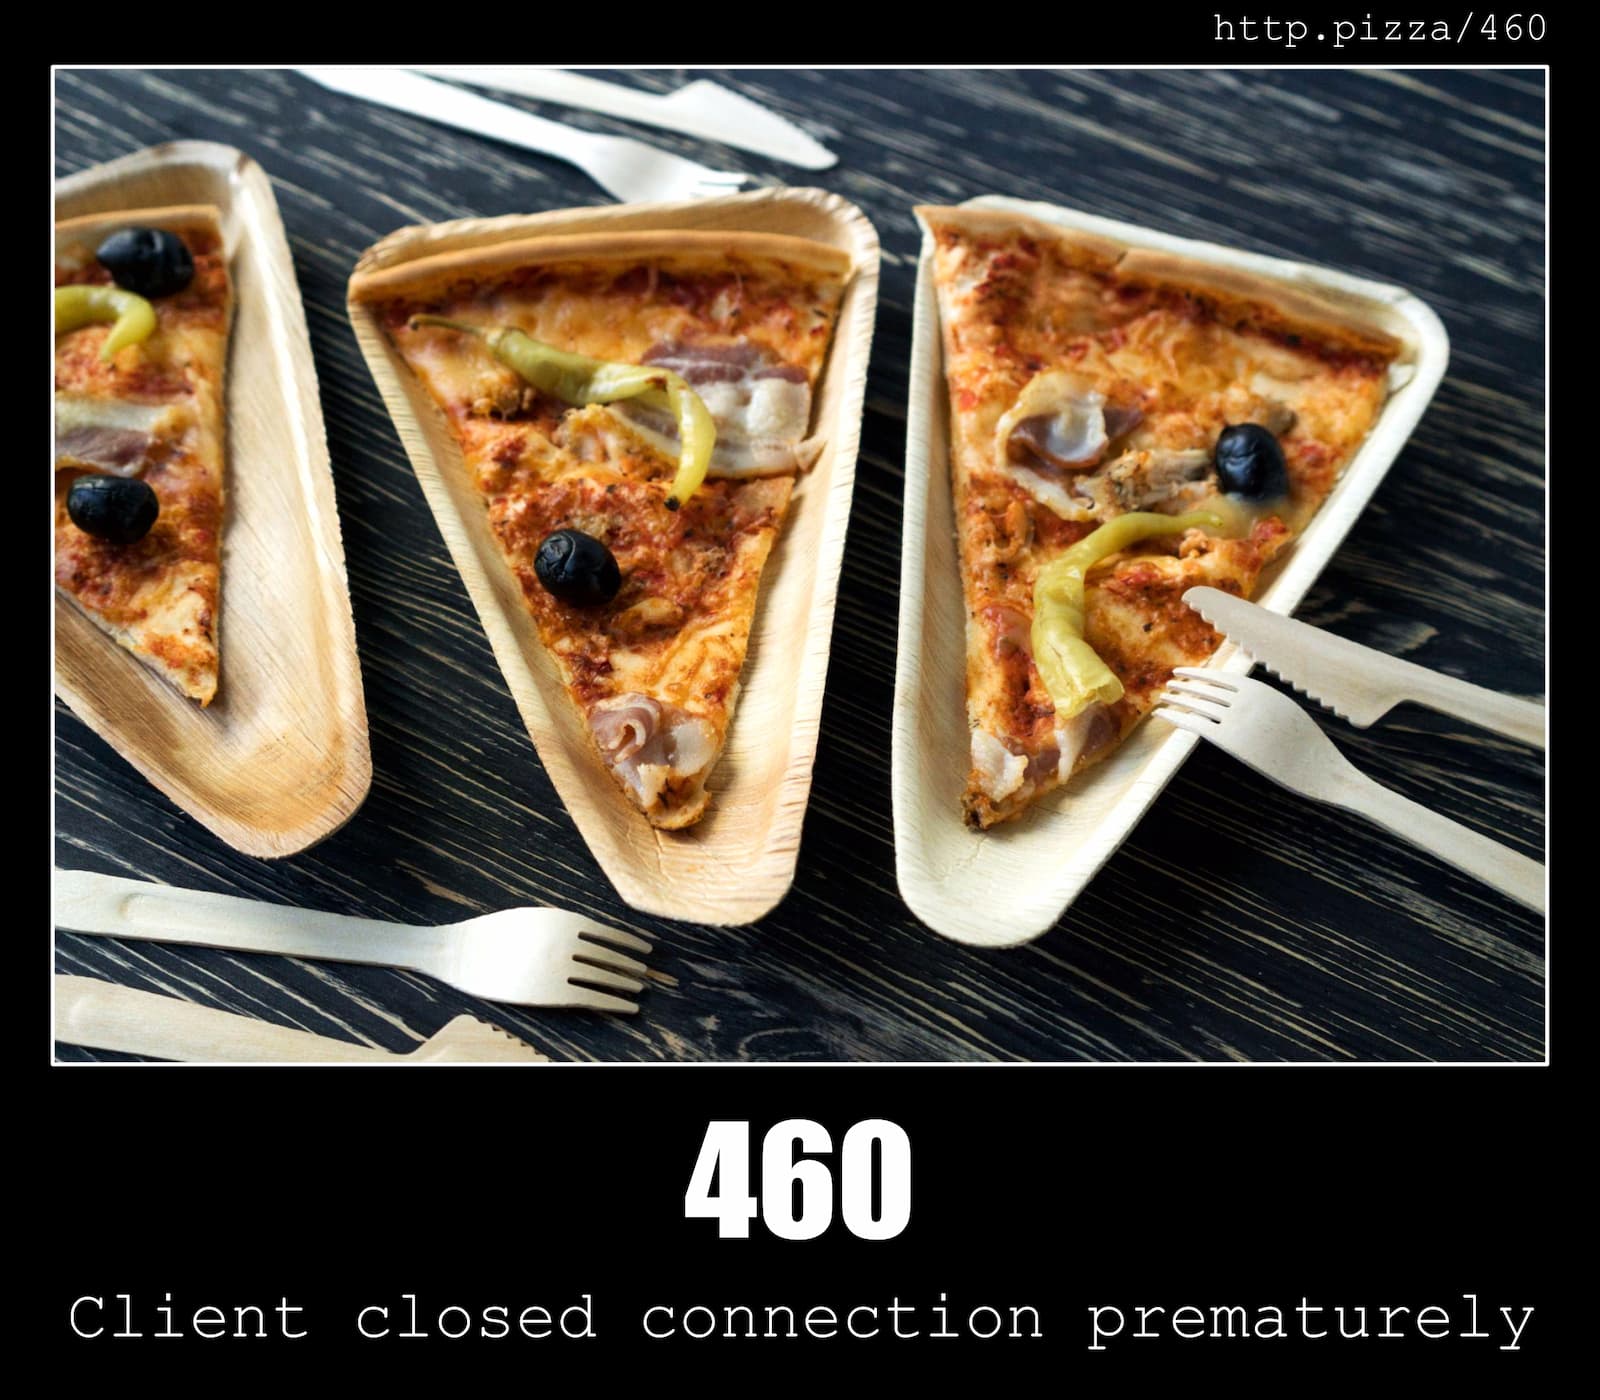 HTTP Status Code 460 Client closed connection prematurely & Pizzas